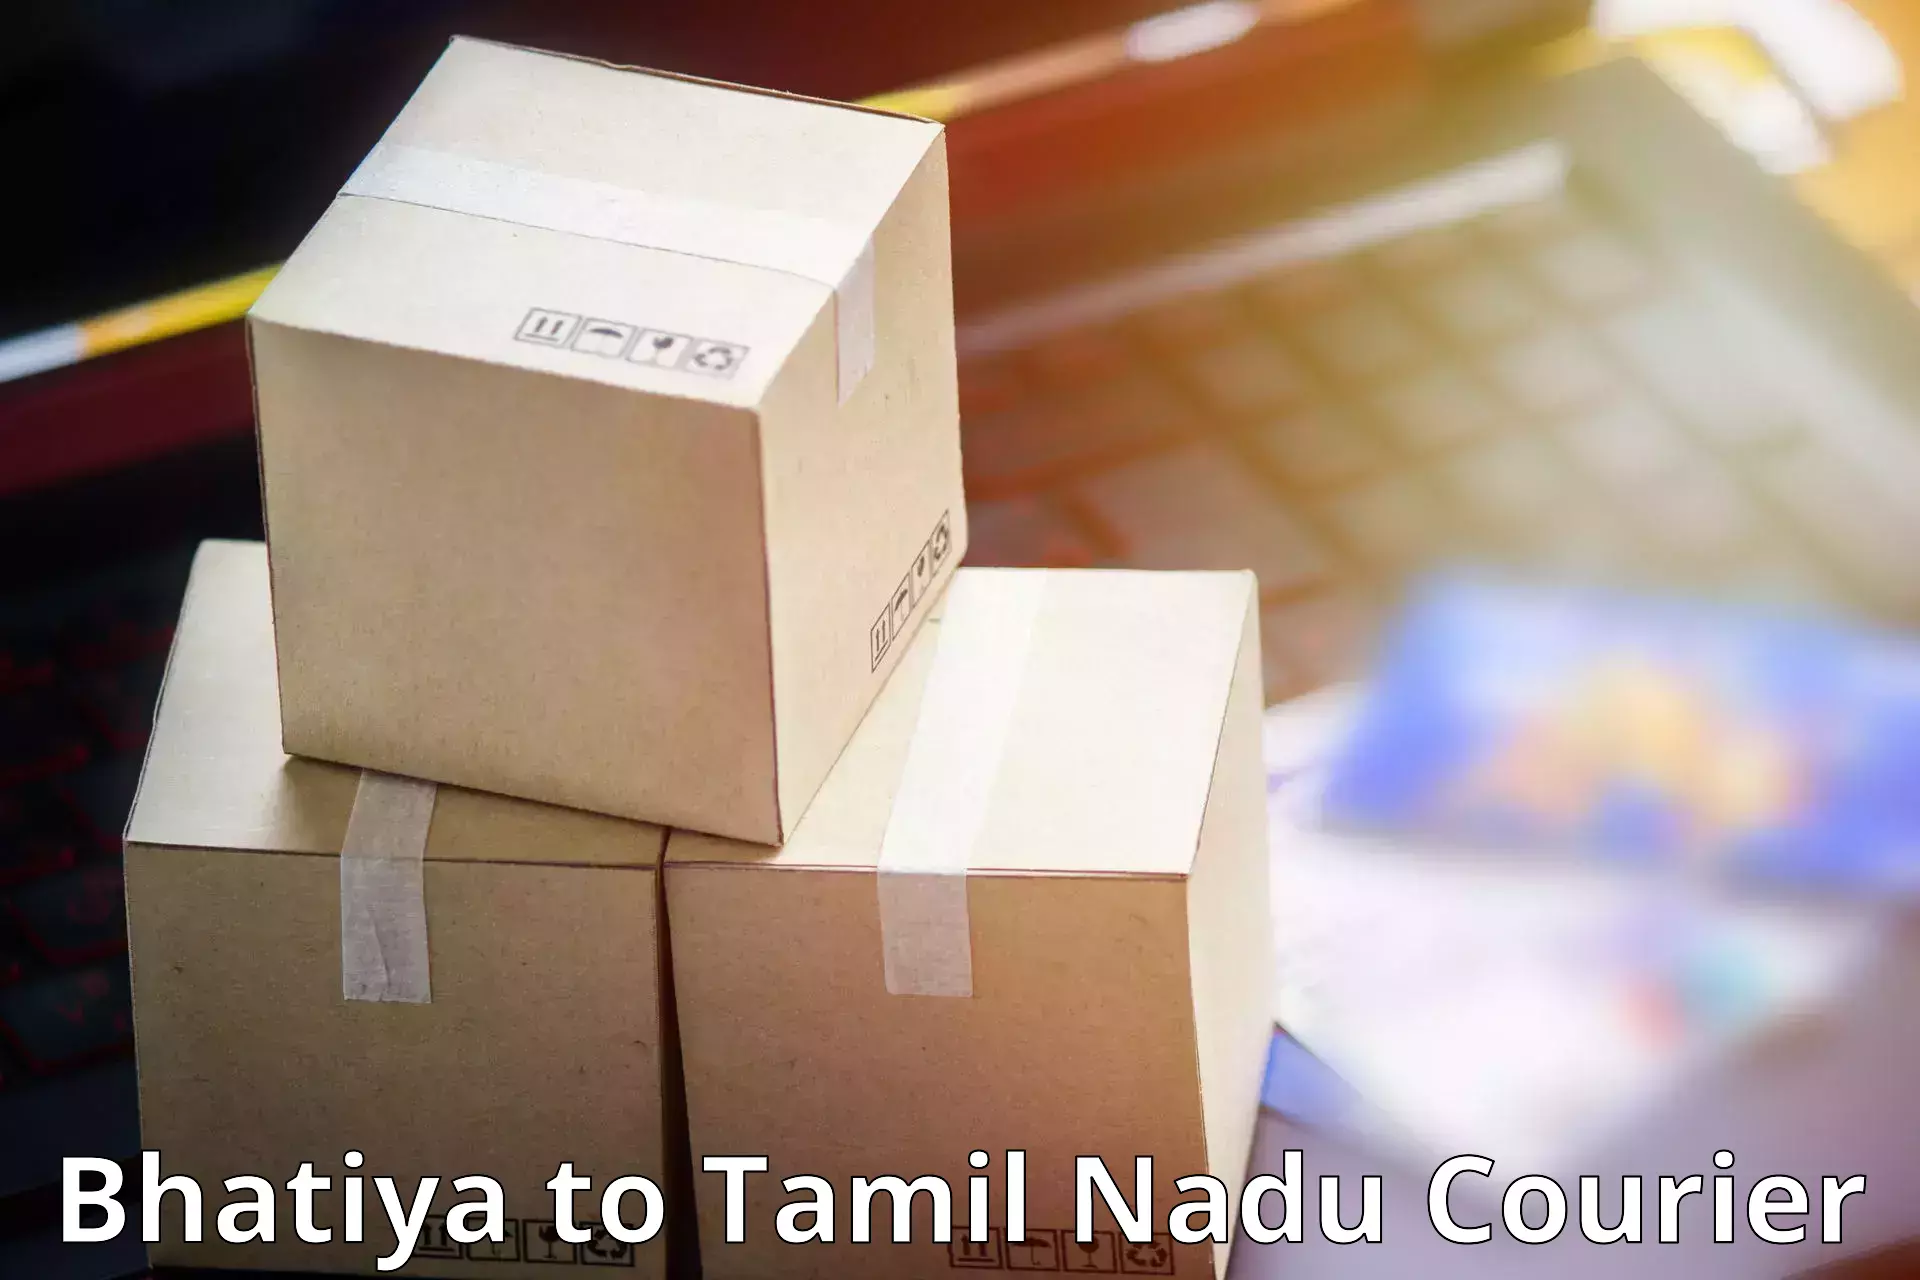 Quick dispatch service Bhatiya to Tamil Nadu